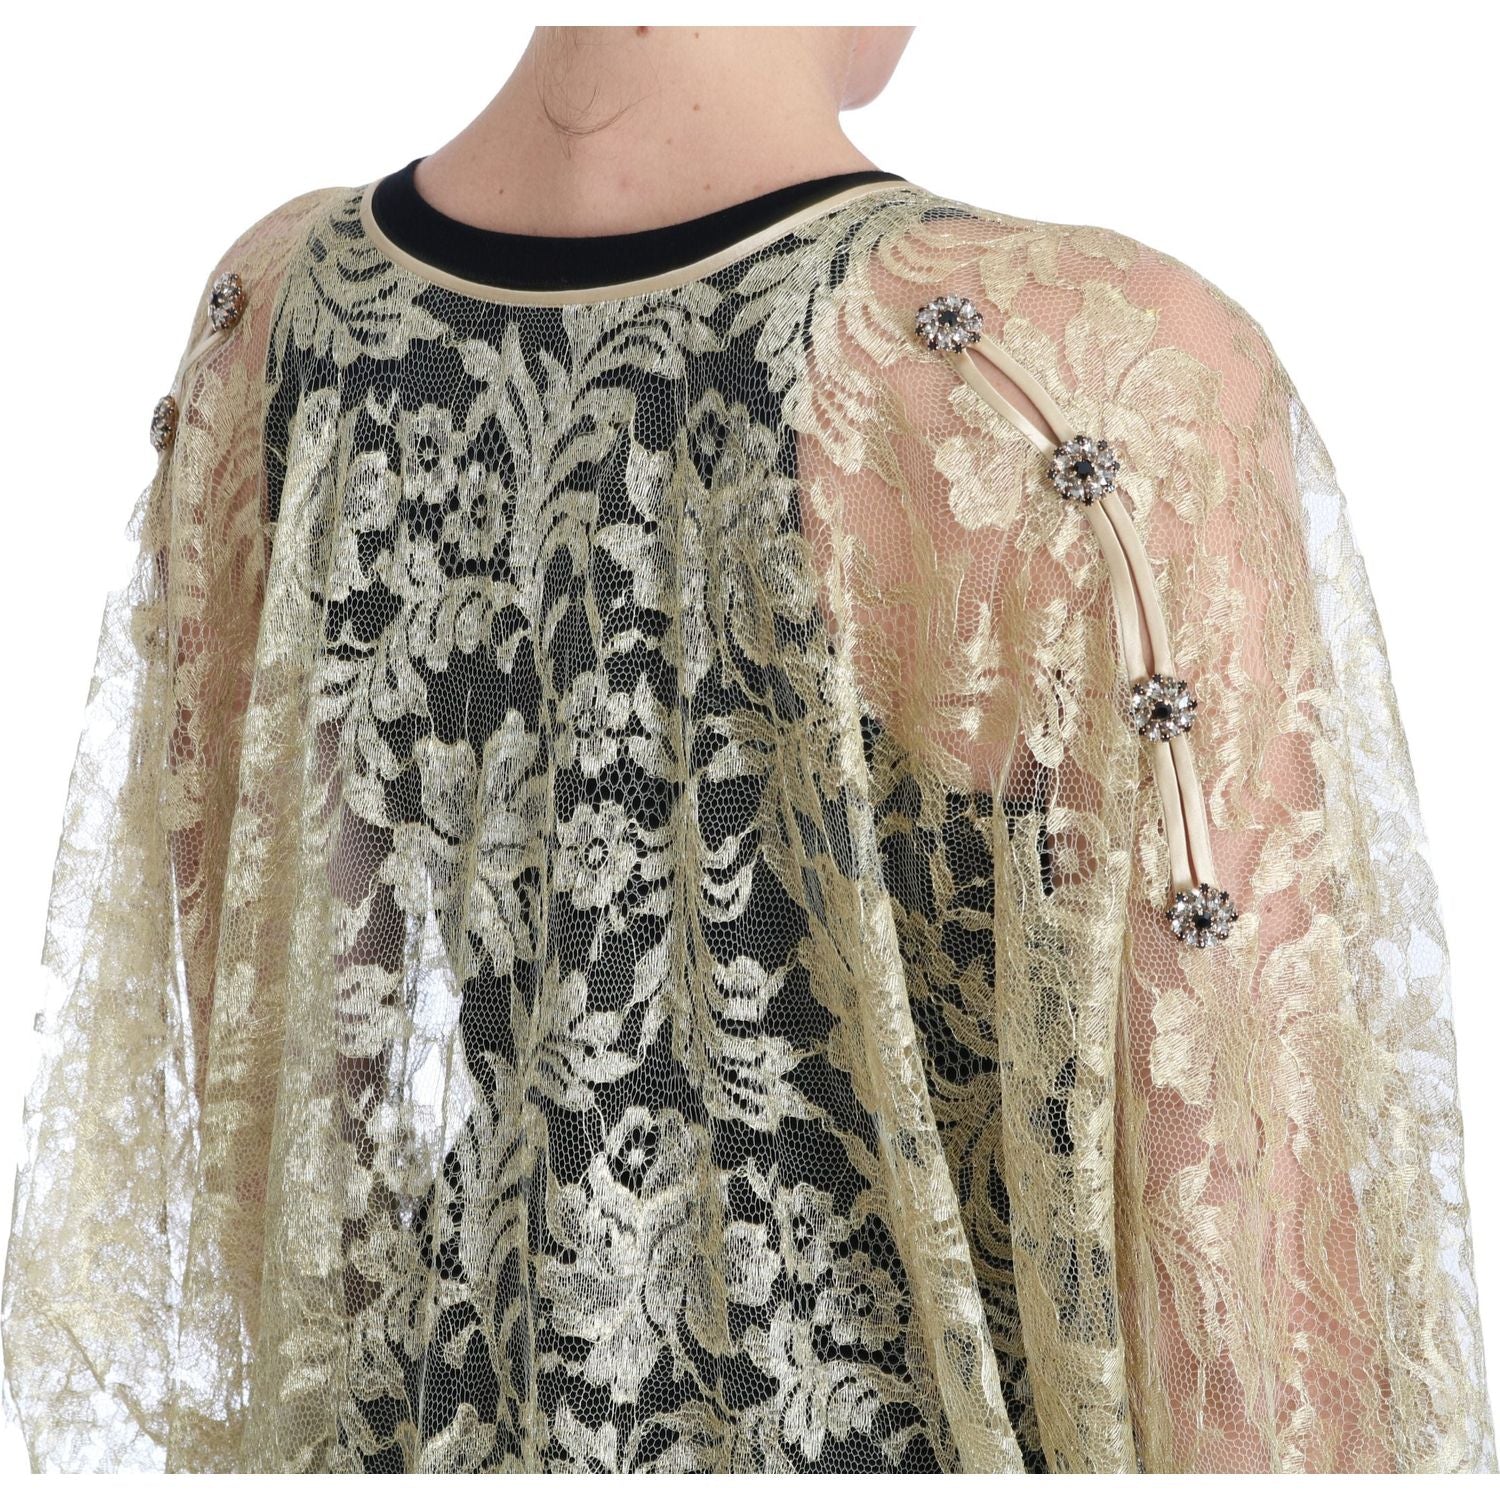 Dolce & Gabbana | Gold Floral Lace Crystal Gown Cape Dress | McRichard Designer Brands